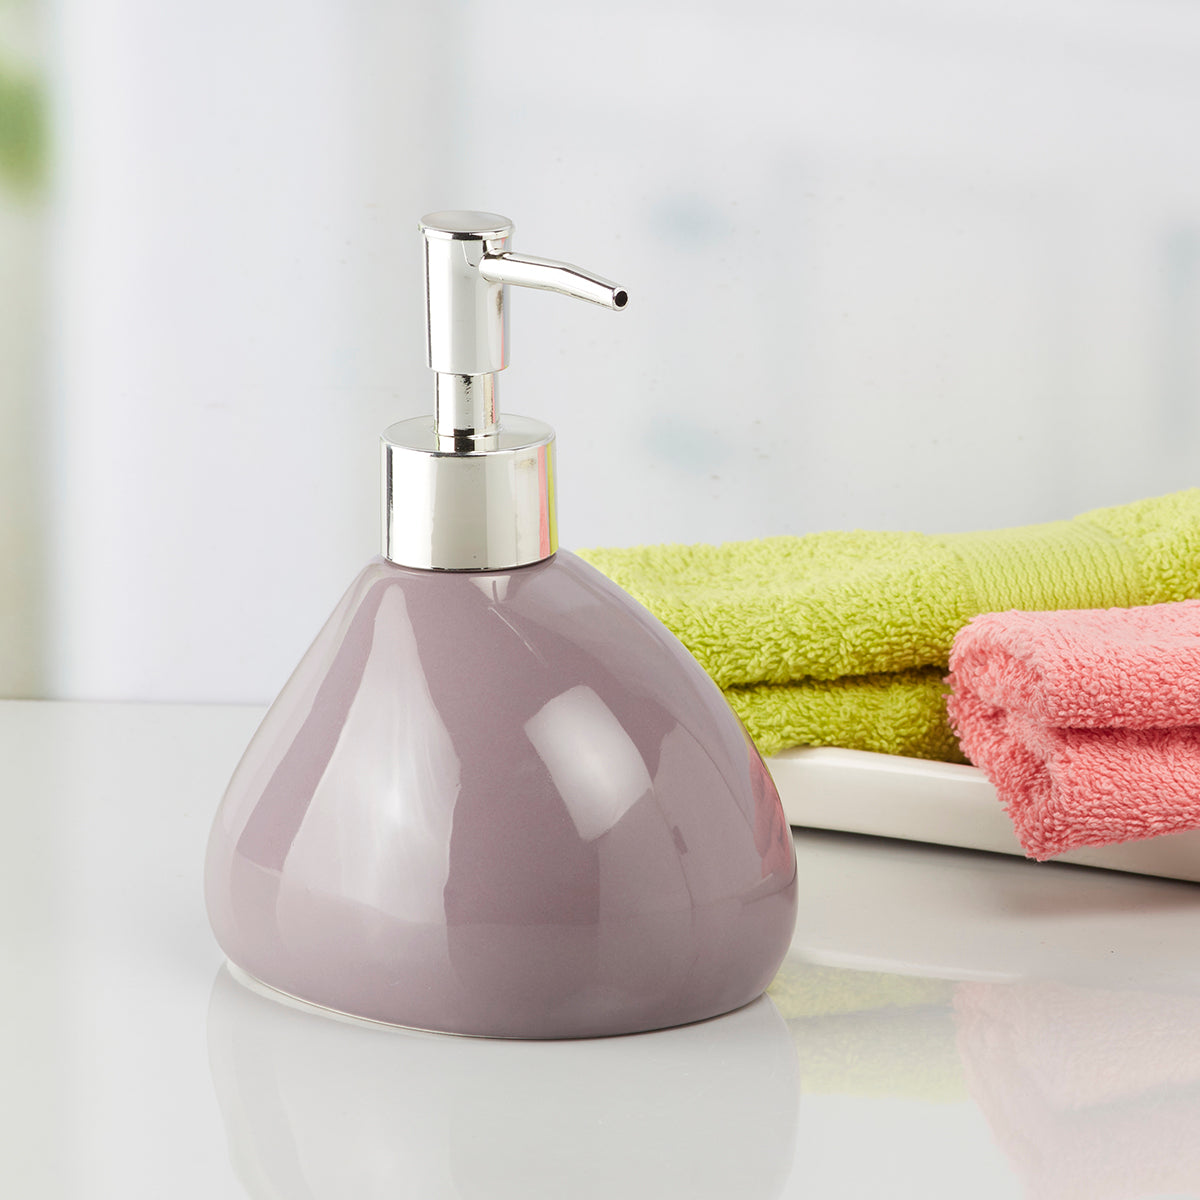 Ceramic Soap Dispenser Pump for Bathroom for Bath Gel, Lotion, Shampoo (7970)